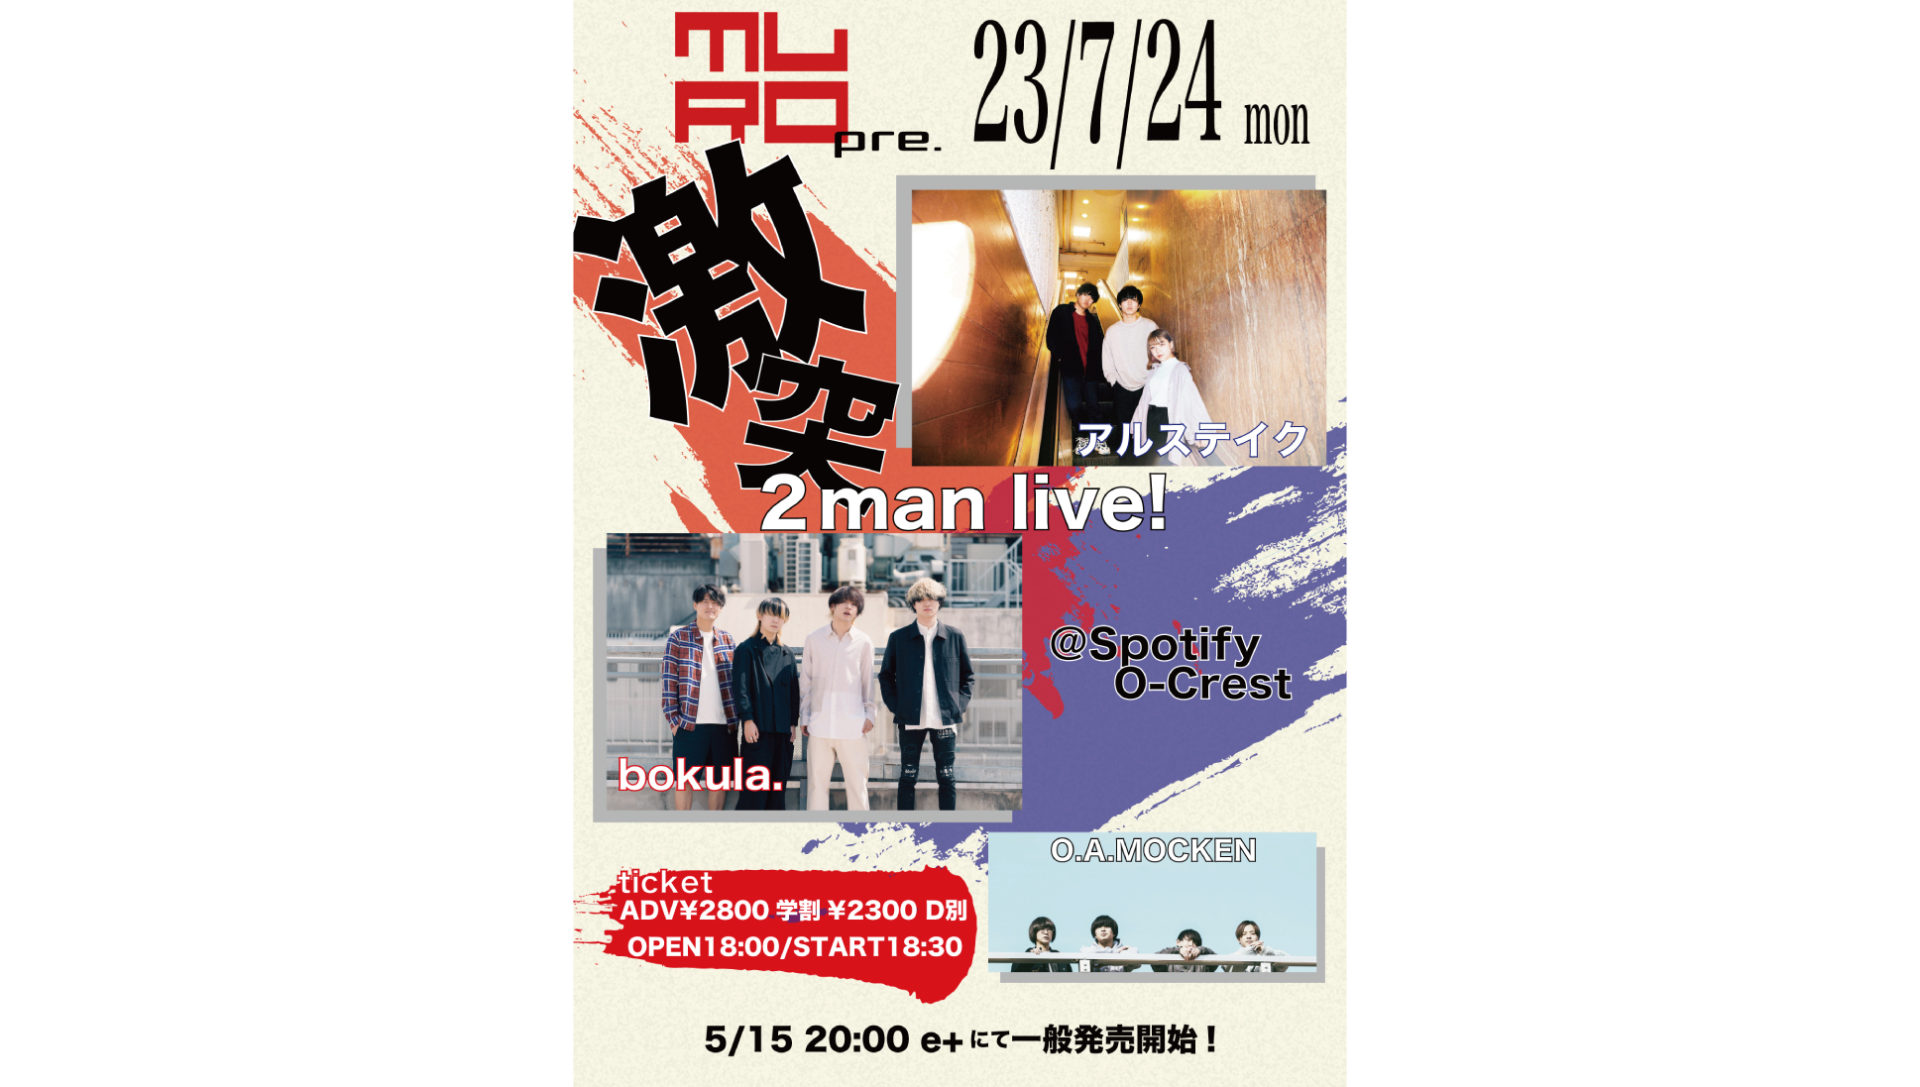 23/7/24 O-Crest MURO presents 激突 2man live!アルステイク / bokula 